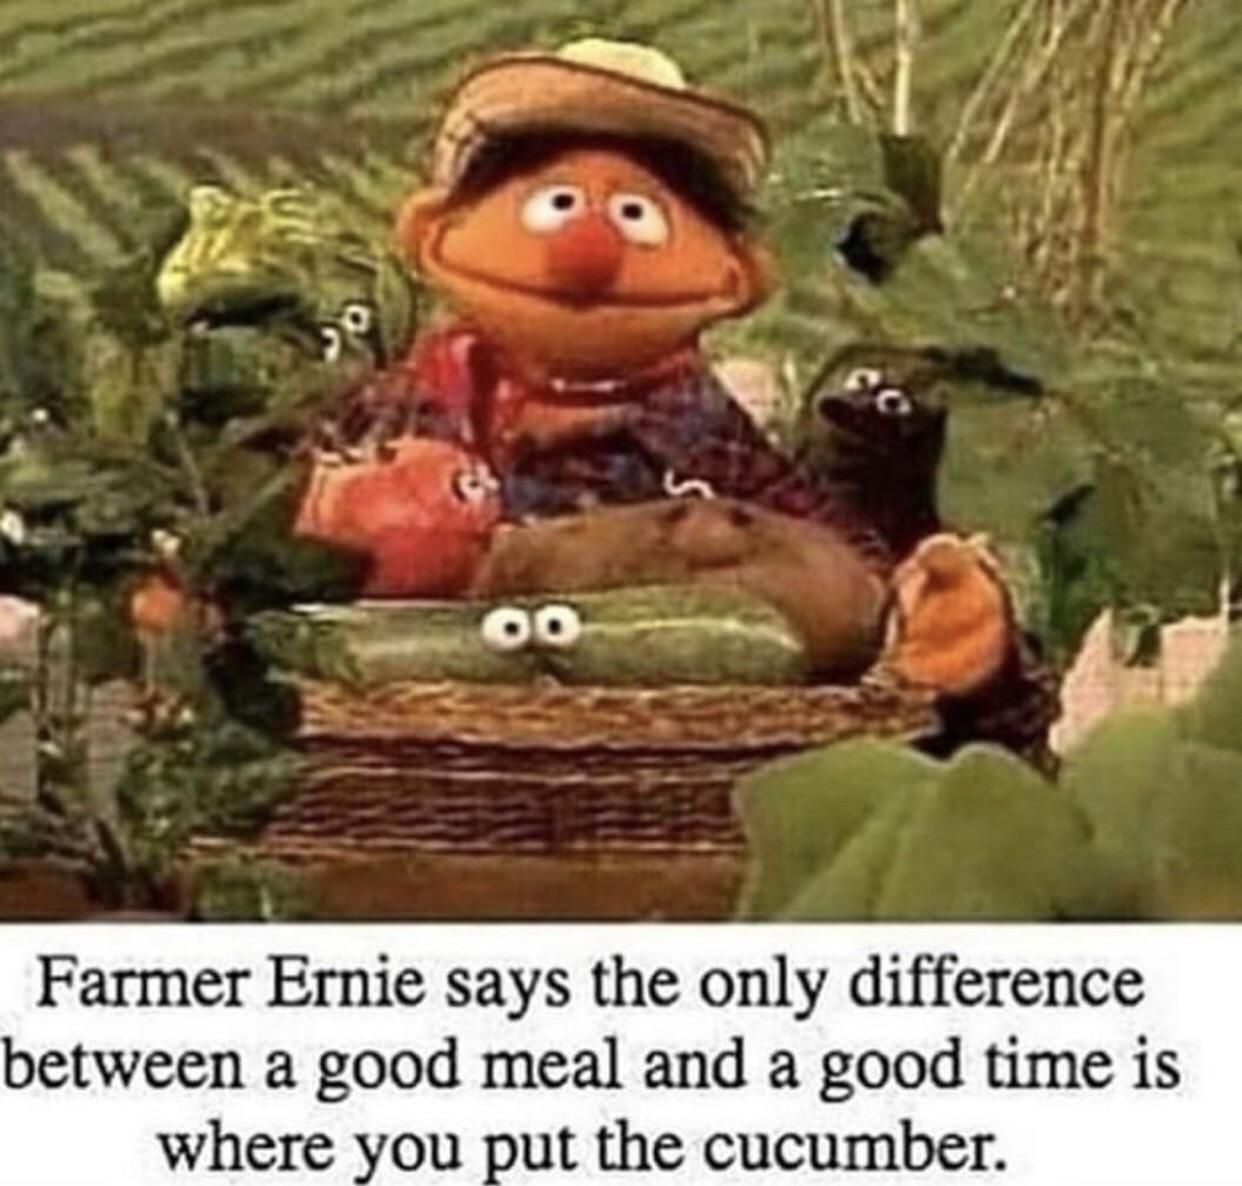 Thank you farmer Ernie, very cool